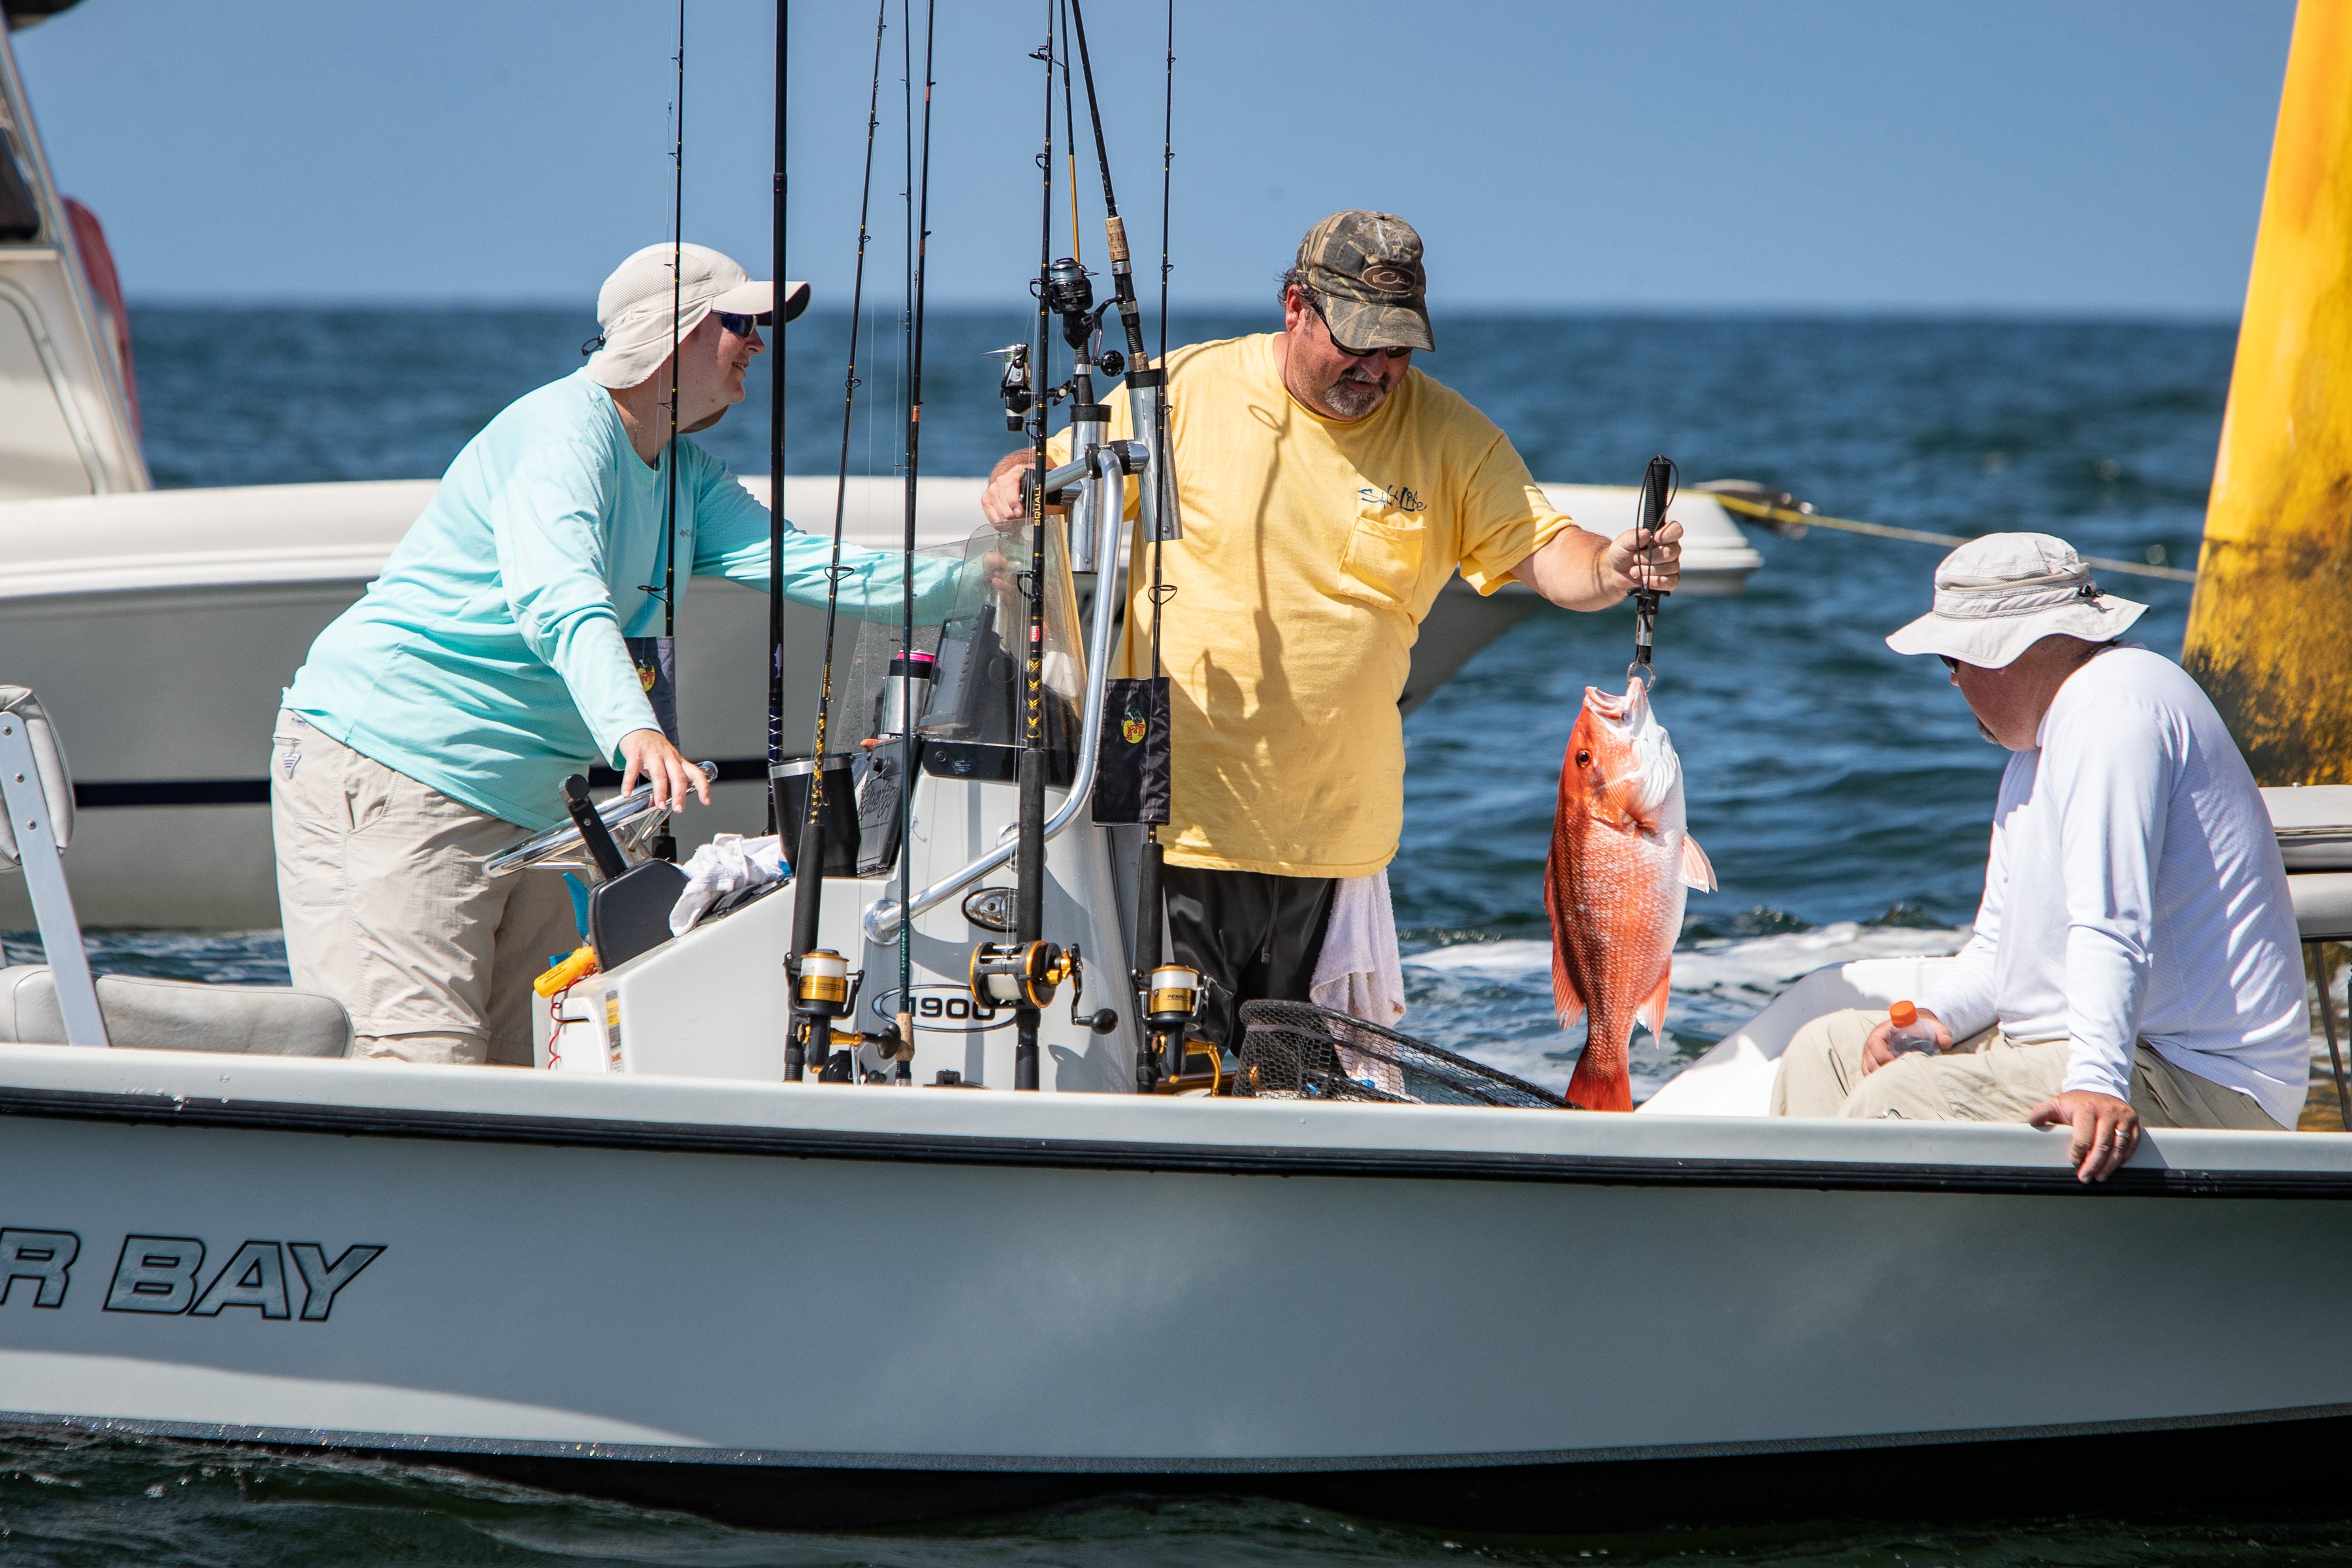 Florida Saltwater Fishing Regulations: Florida Saltwater Fishing Bag  Limits: Florida Saltwater Fishing